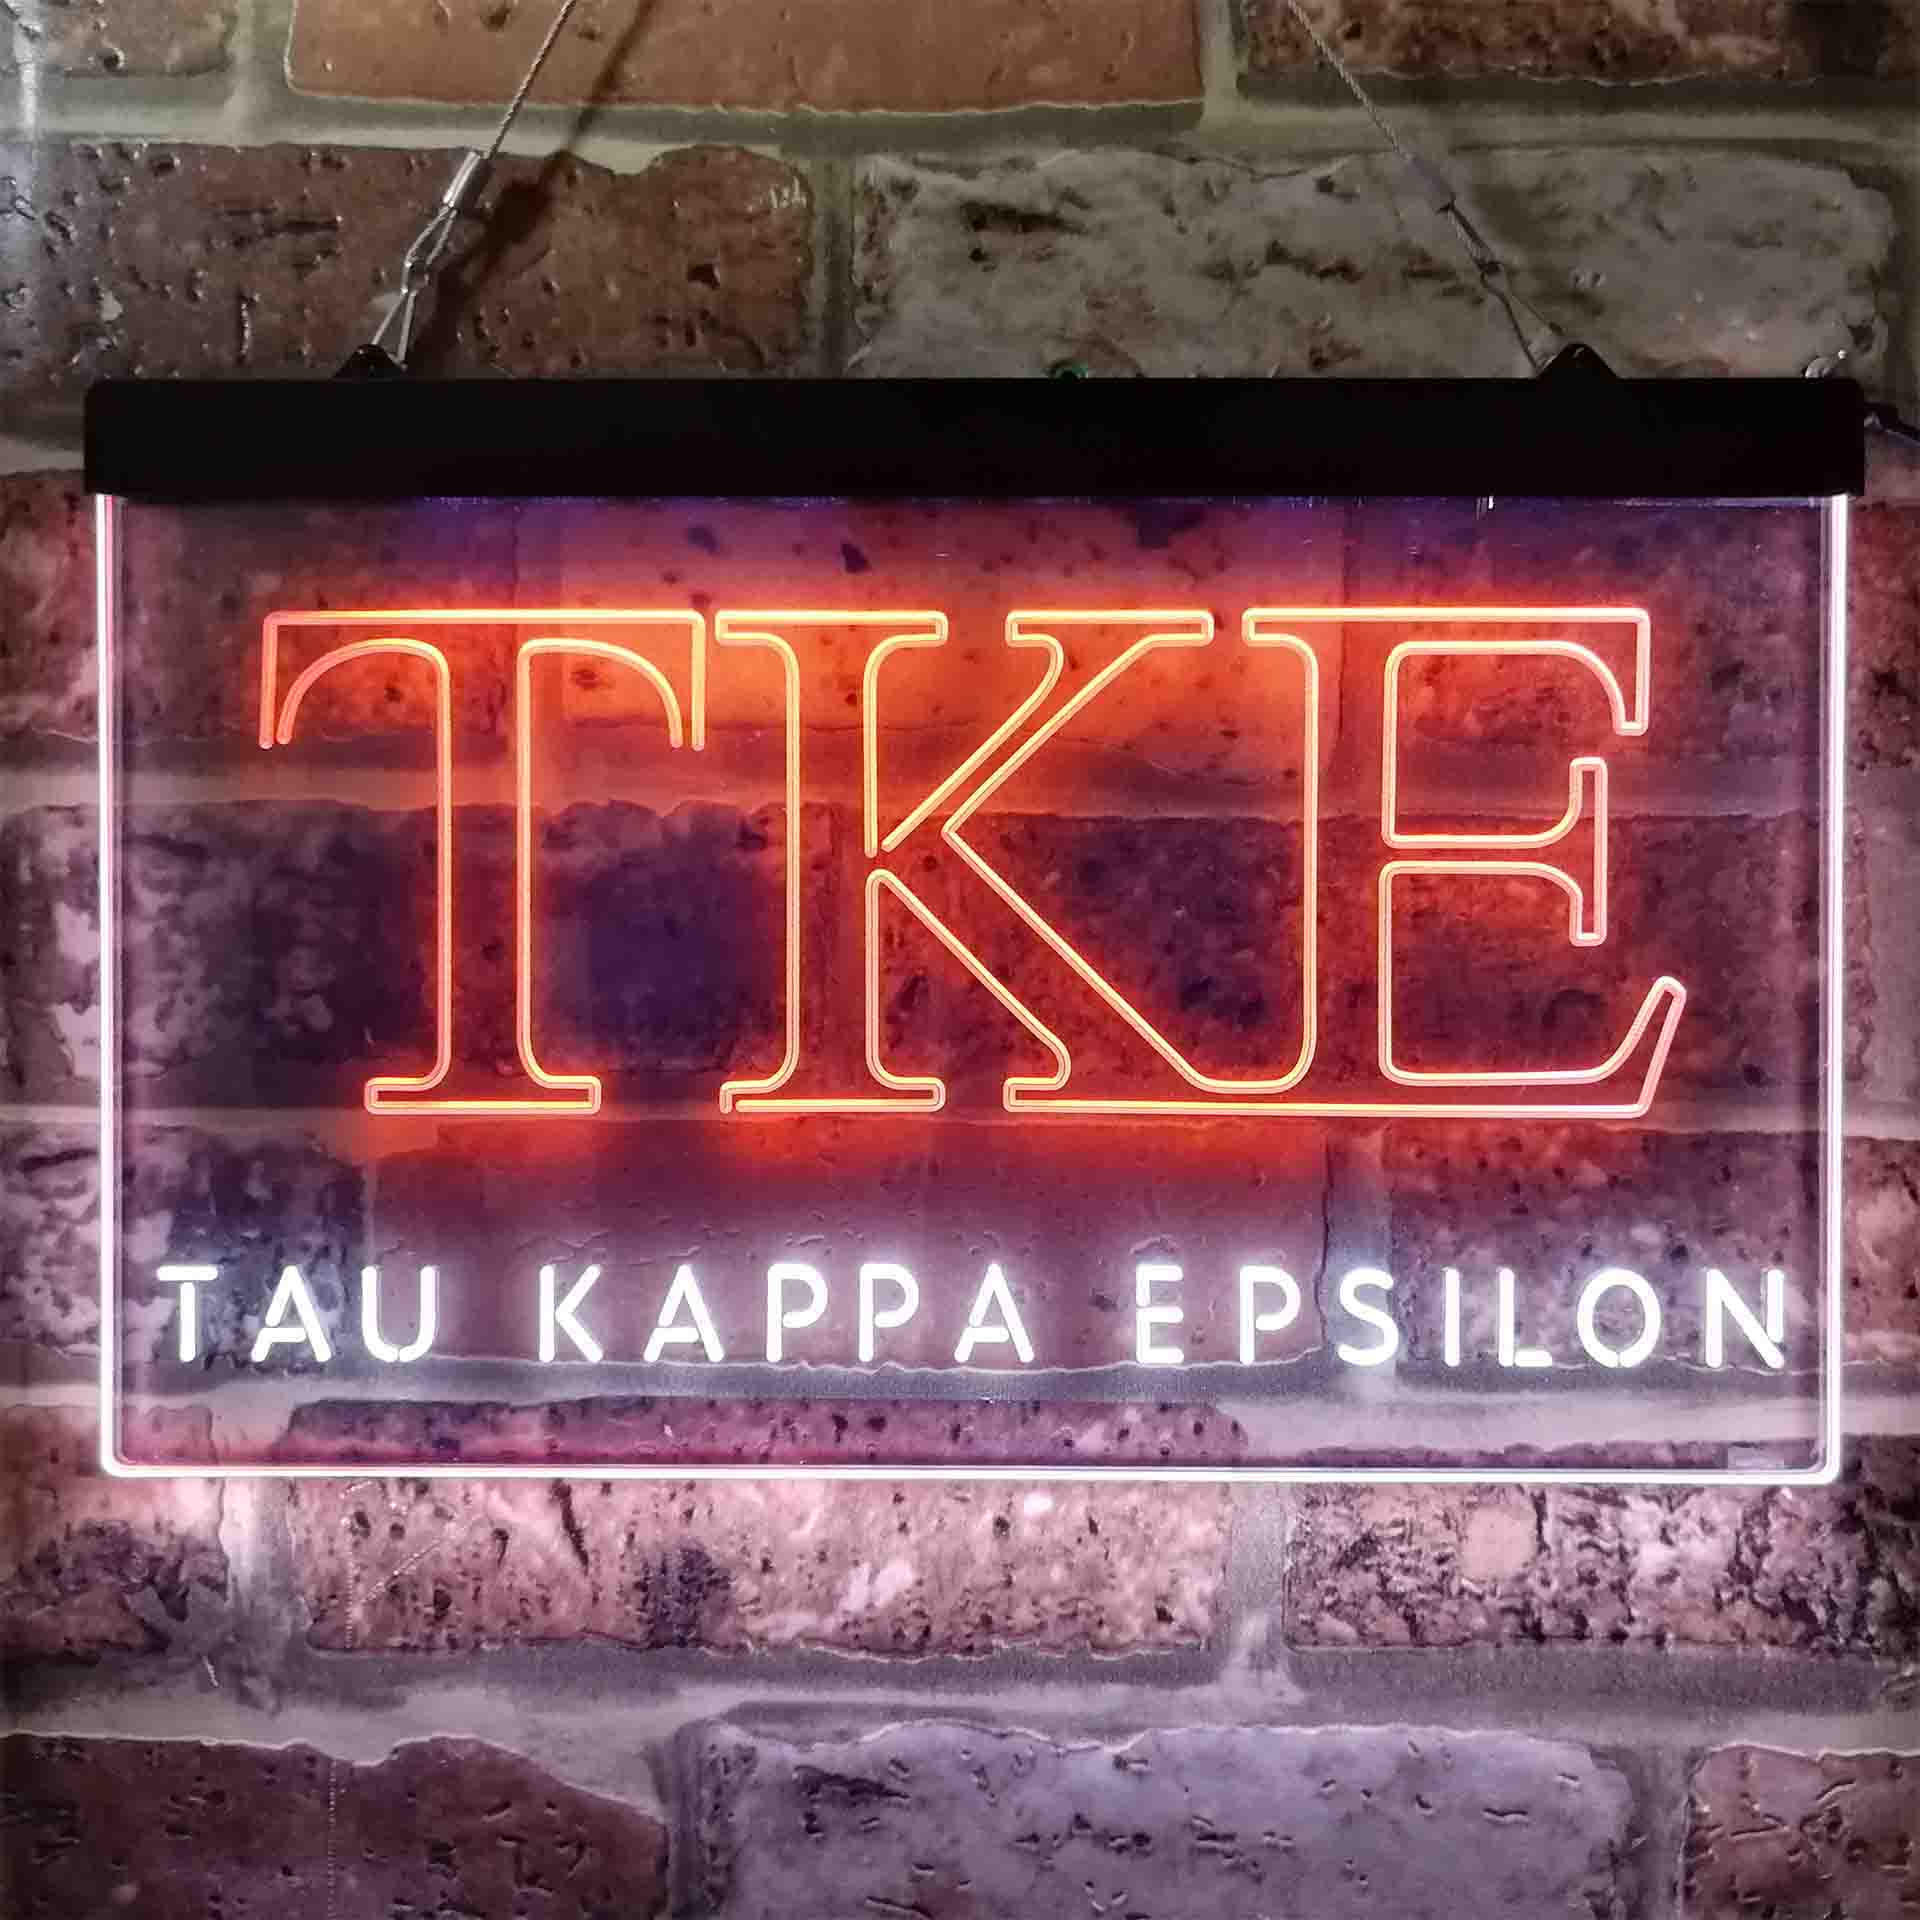 Tau Kappa Epsilon Symbol Neon LED Sign